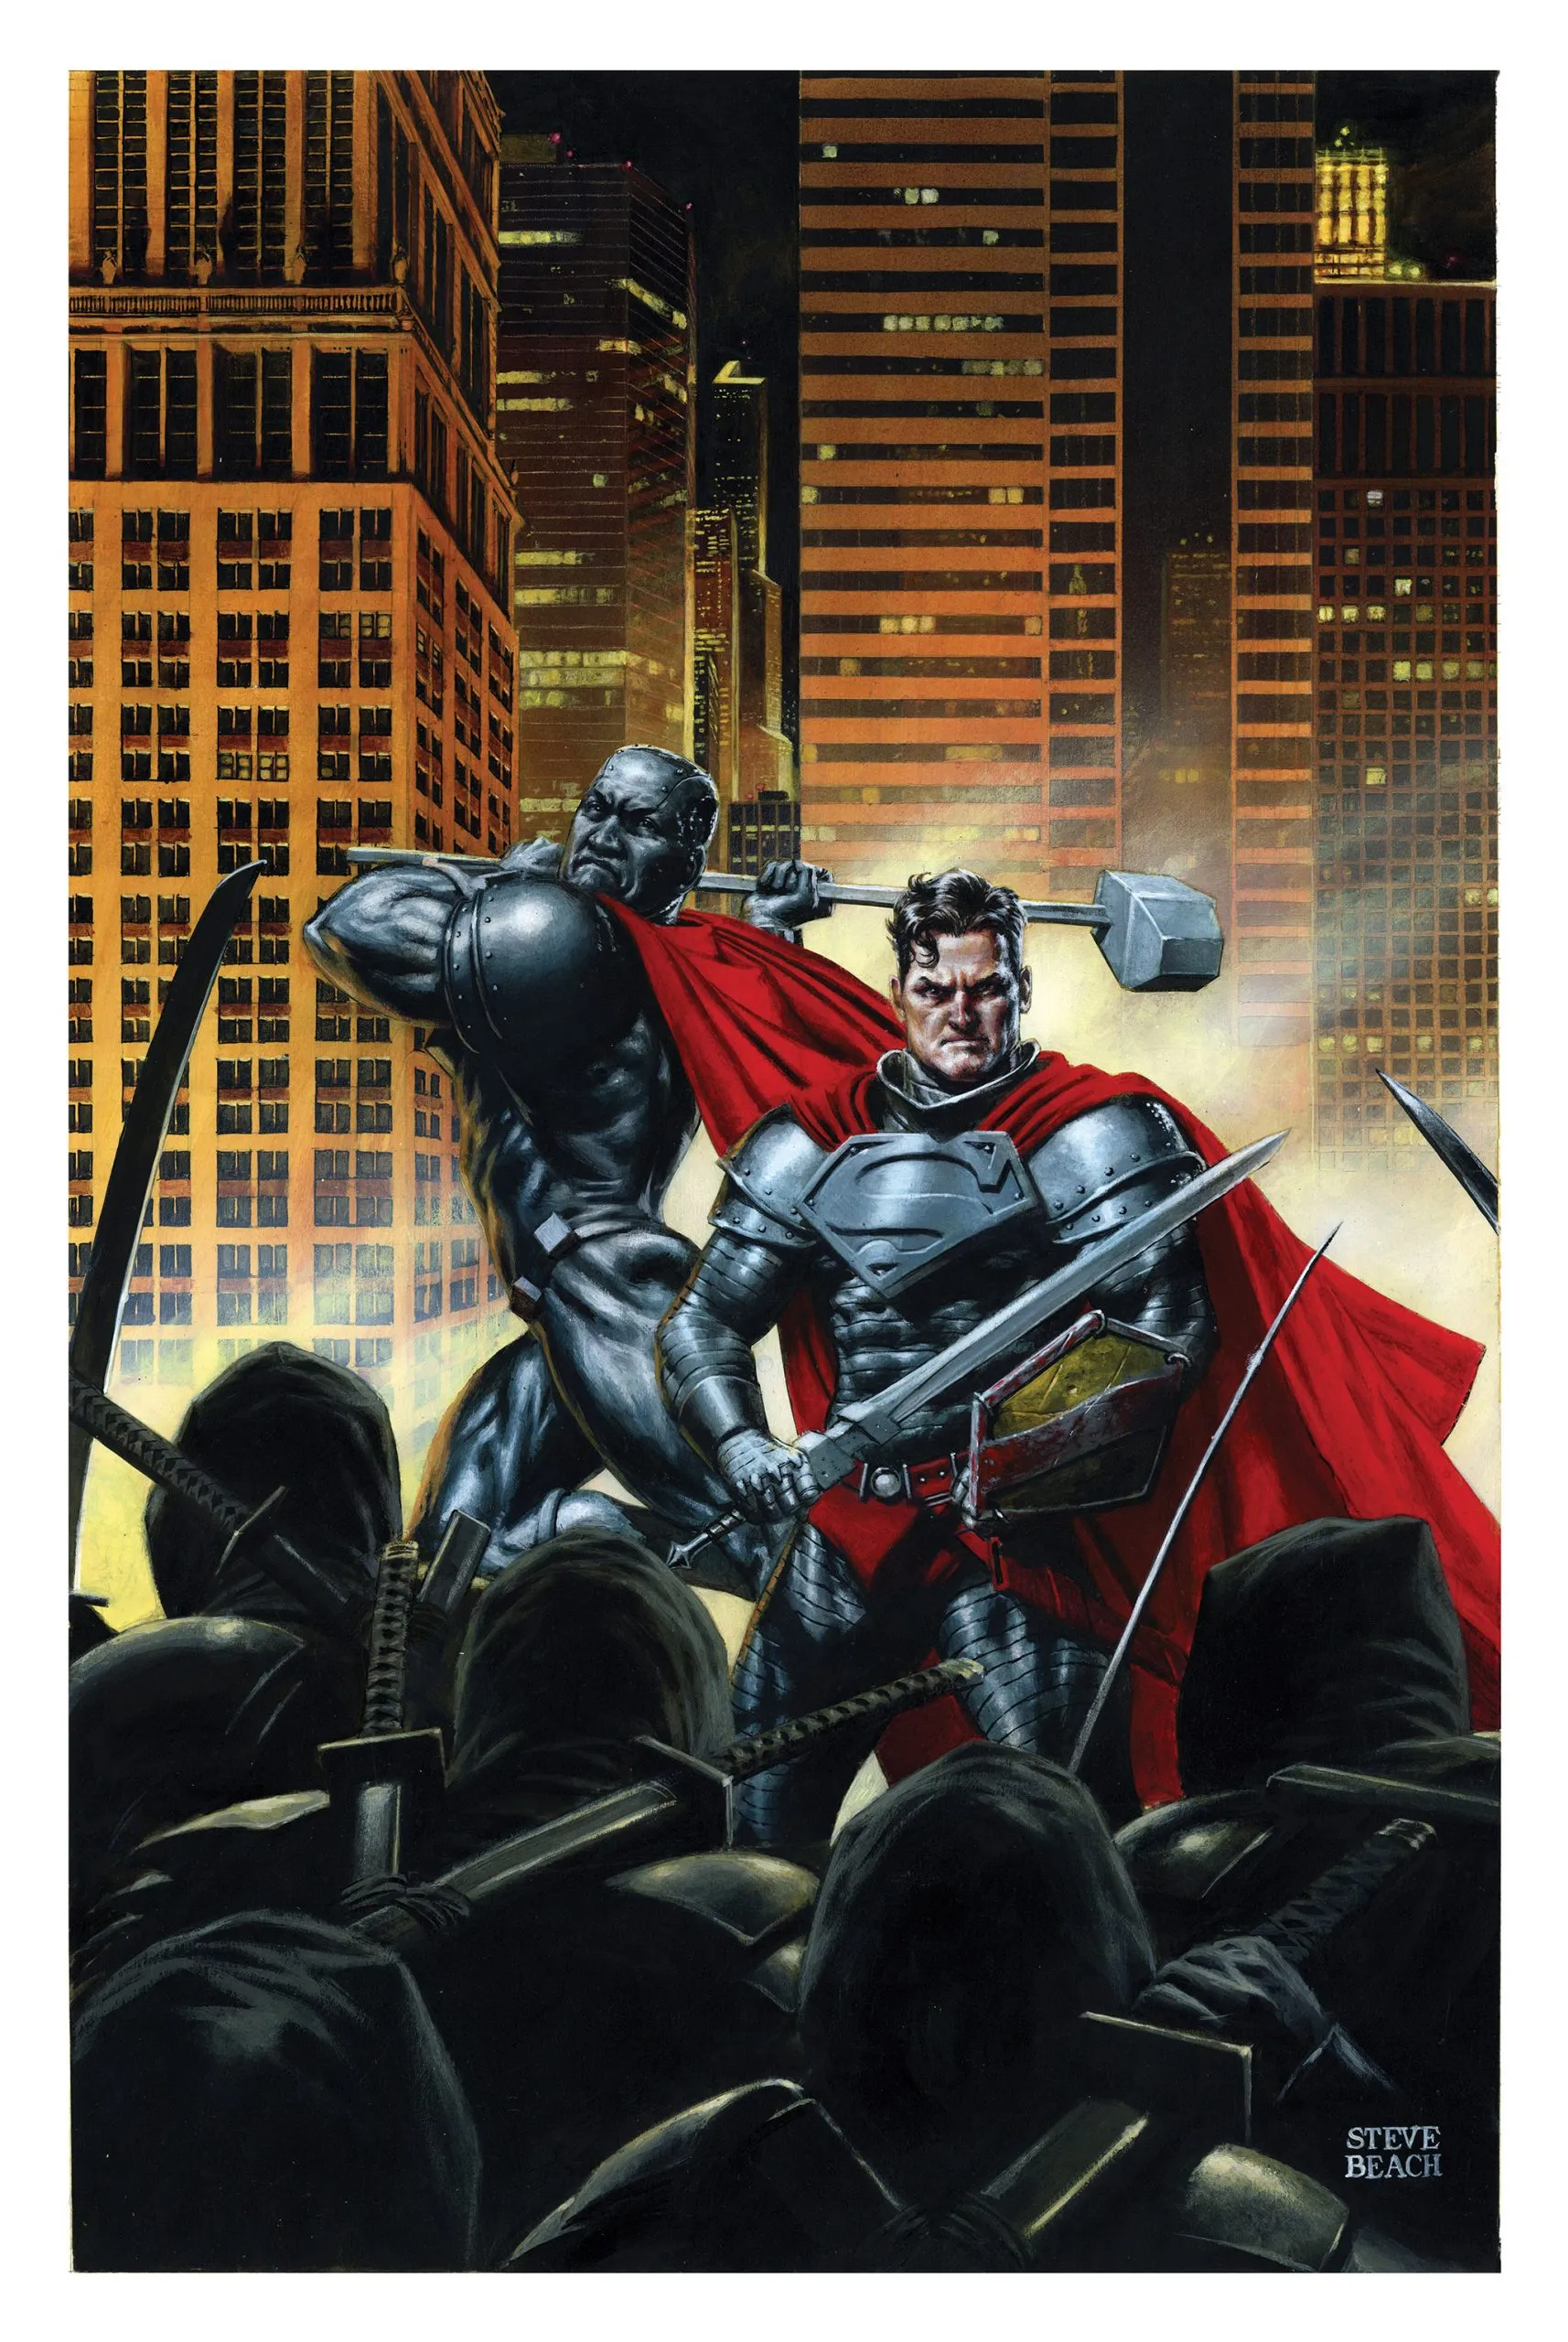 Action Comics #1059 spoilers A Superman